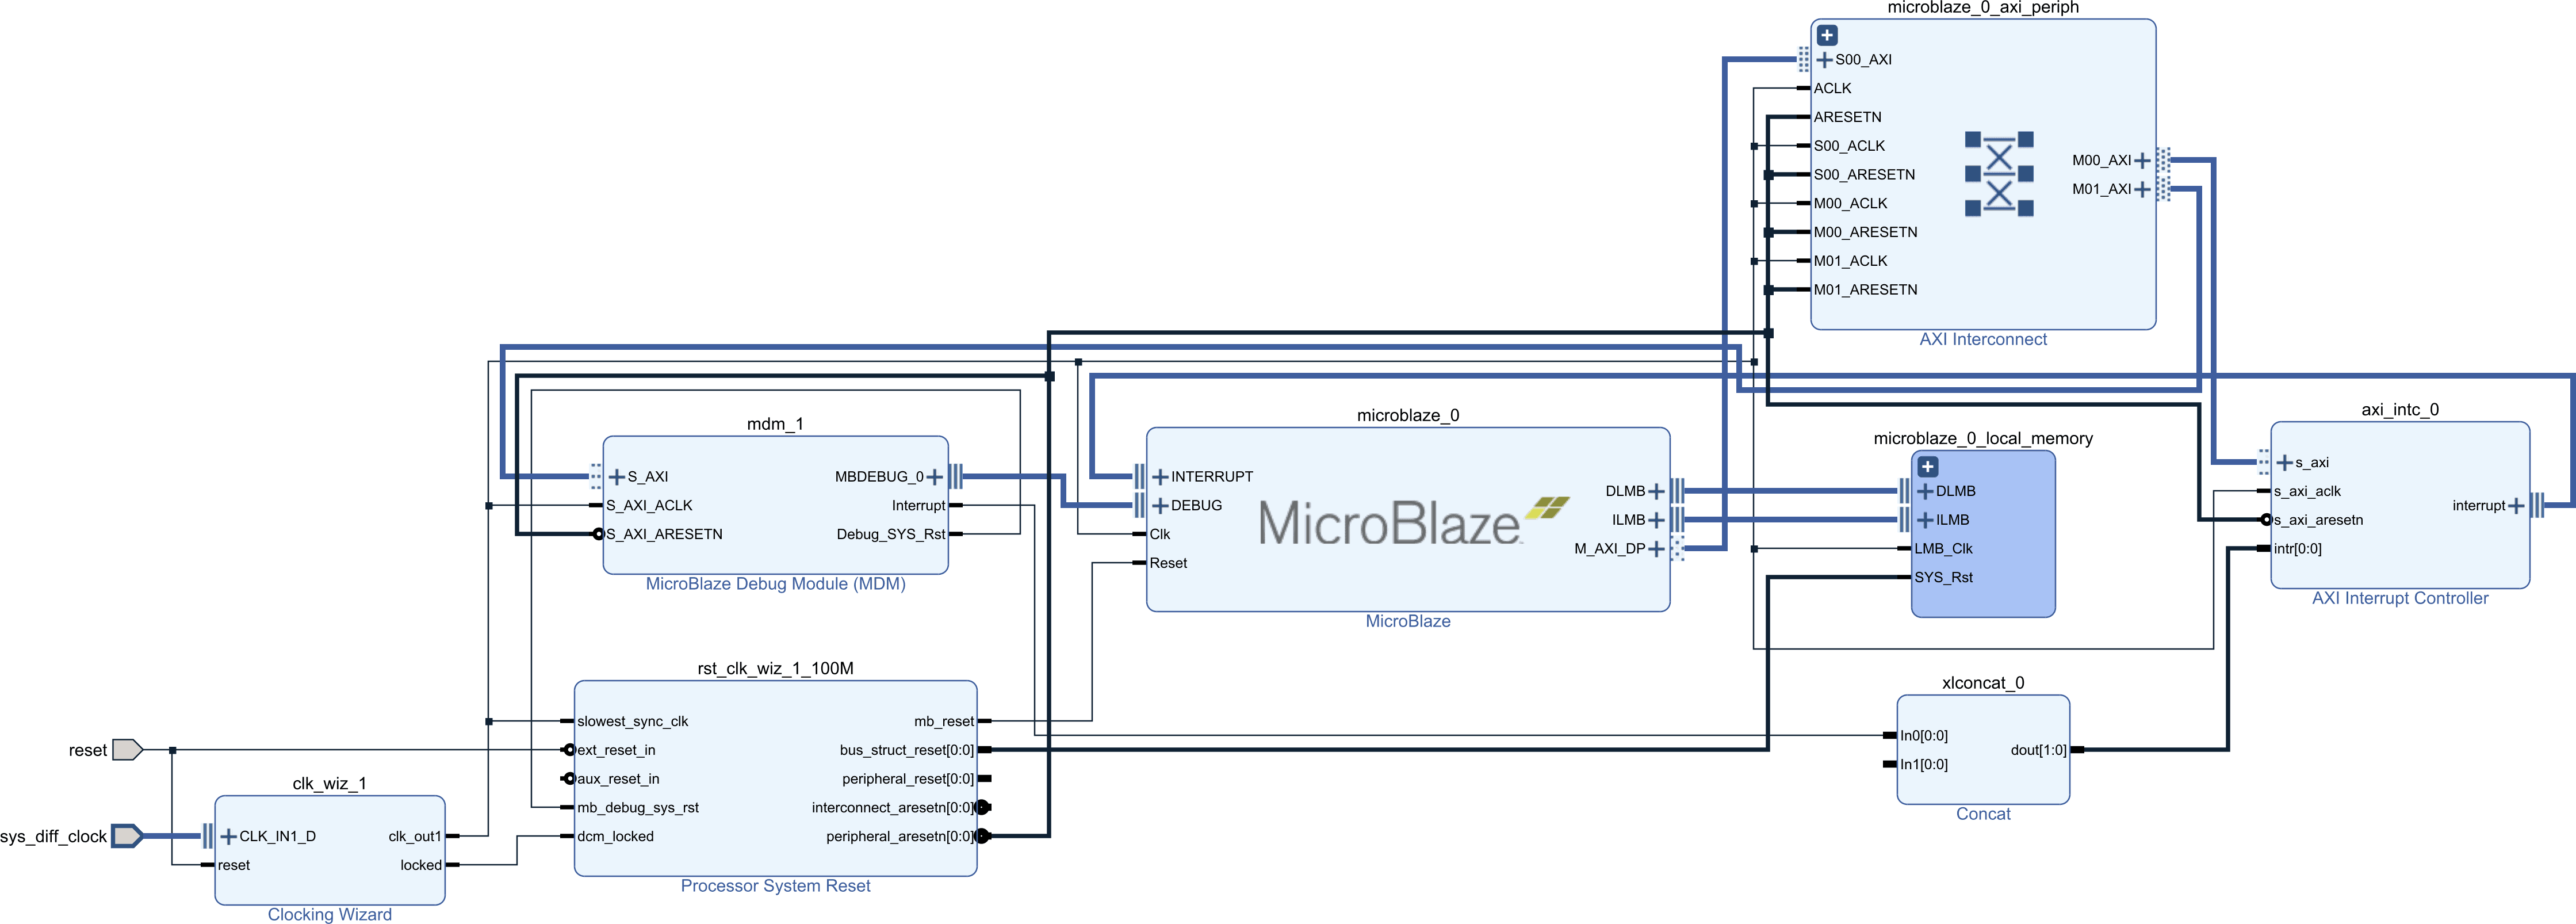 Diagram of a MicroBlaze system using local memory through the dedicated local memory bus (LMB).